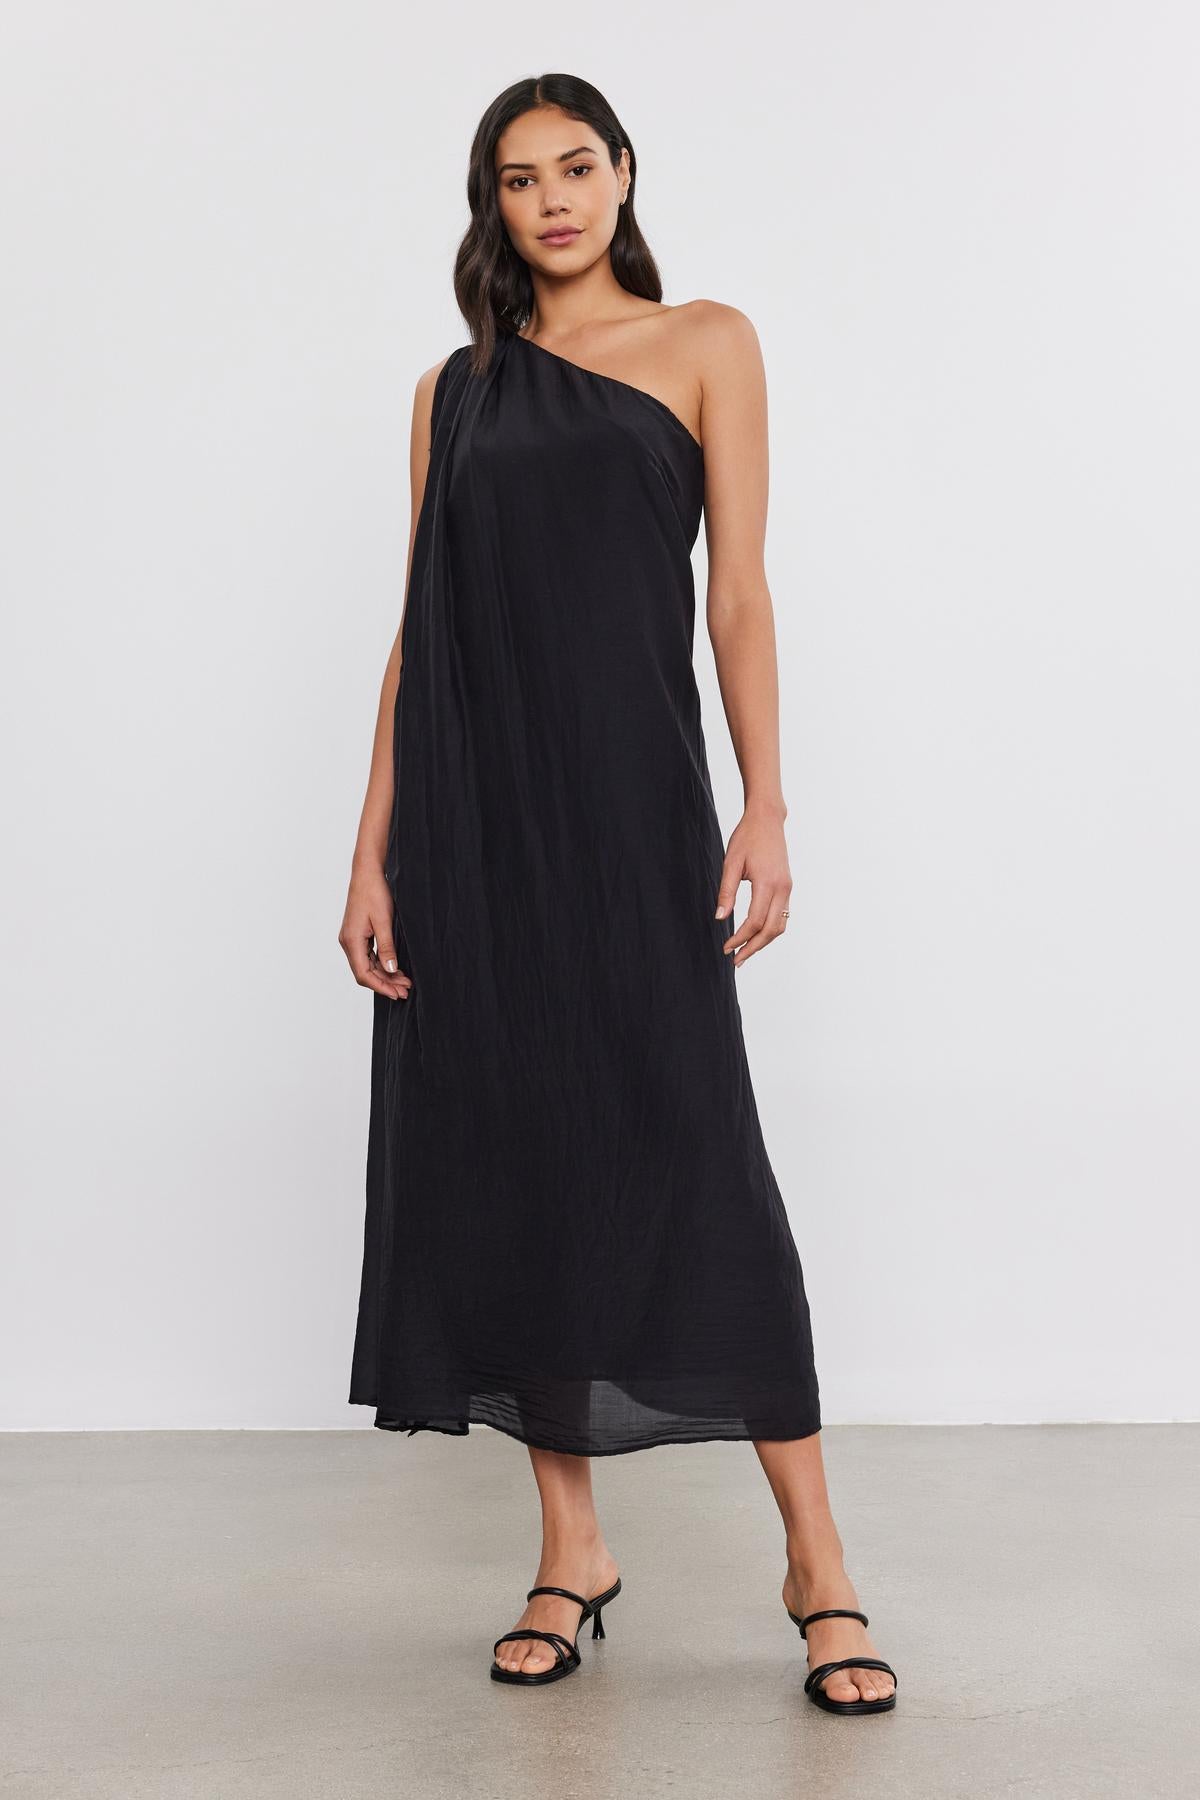 Woman in a black one-shoulder Velvet by Graham & Spencer DIANA DRESS and black heels, standing on a plain backdrop.-36918818898113